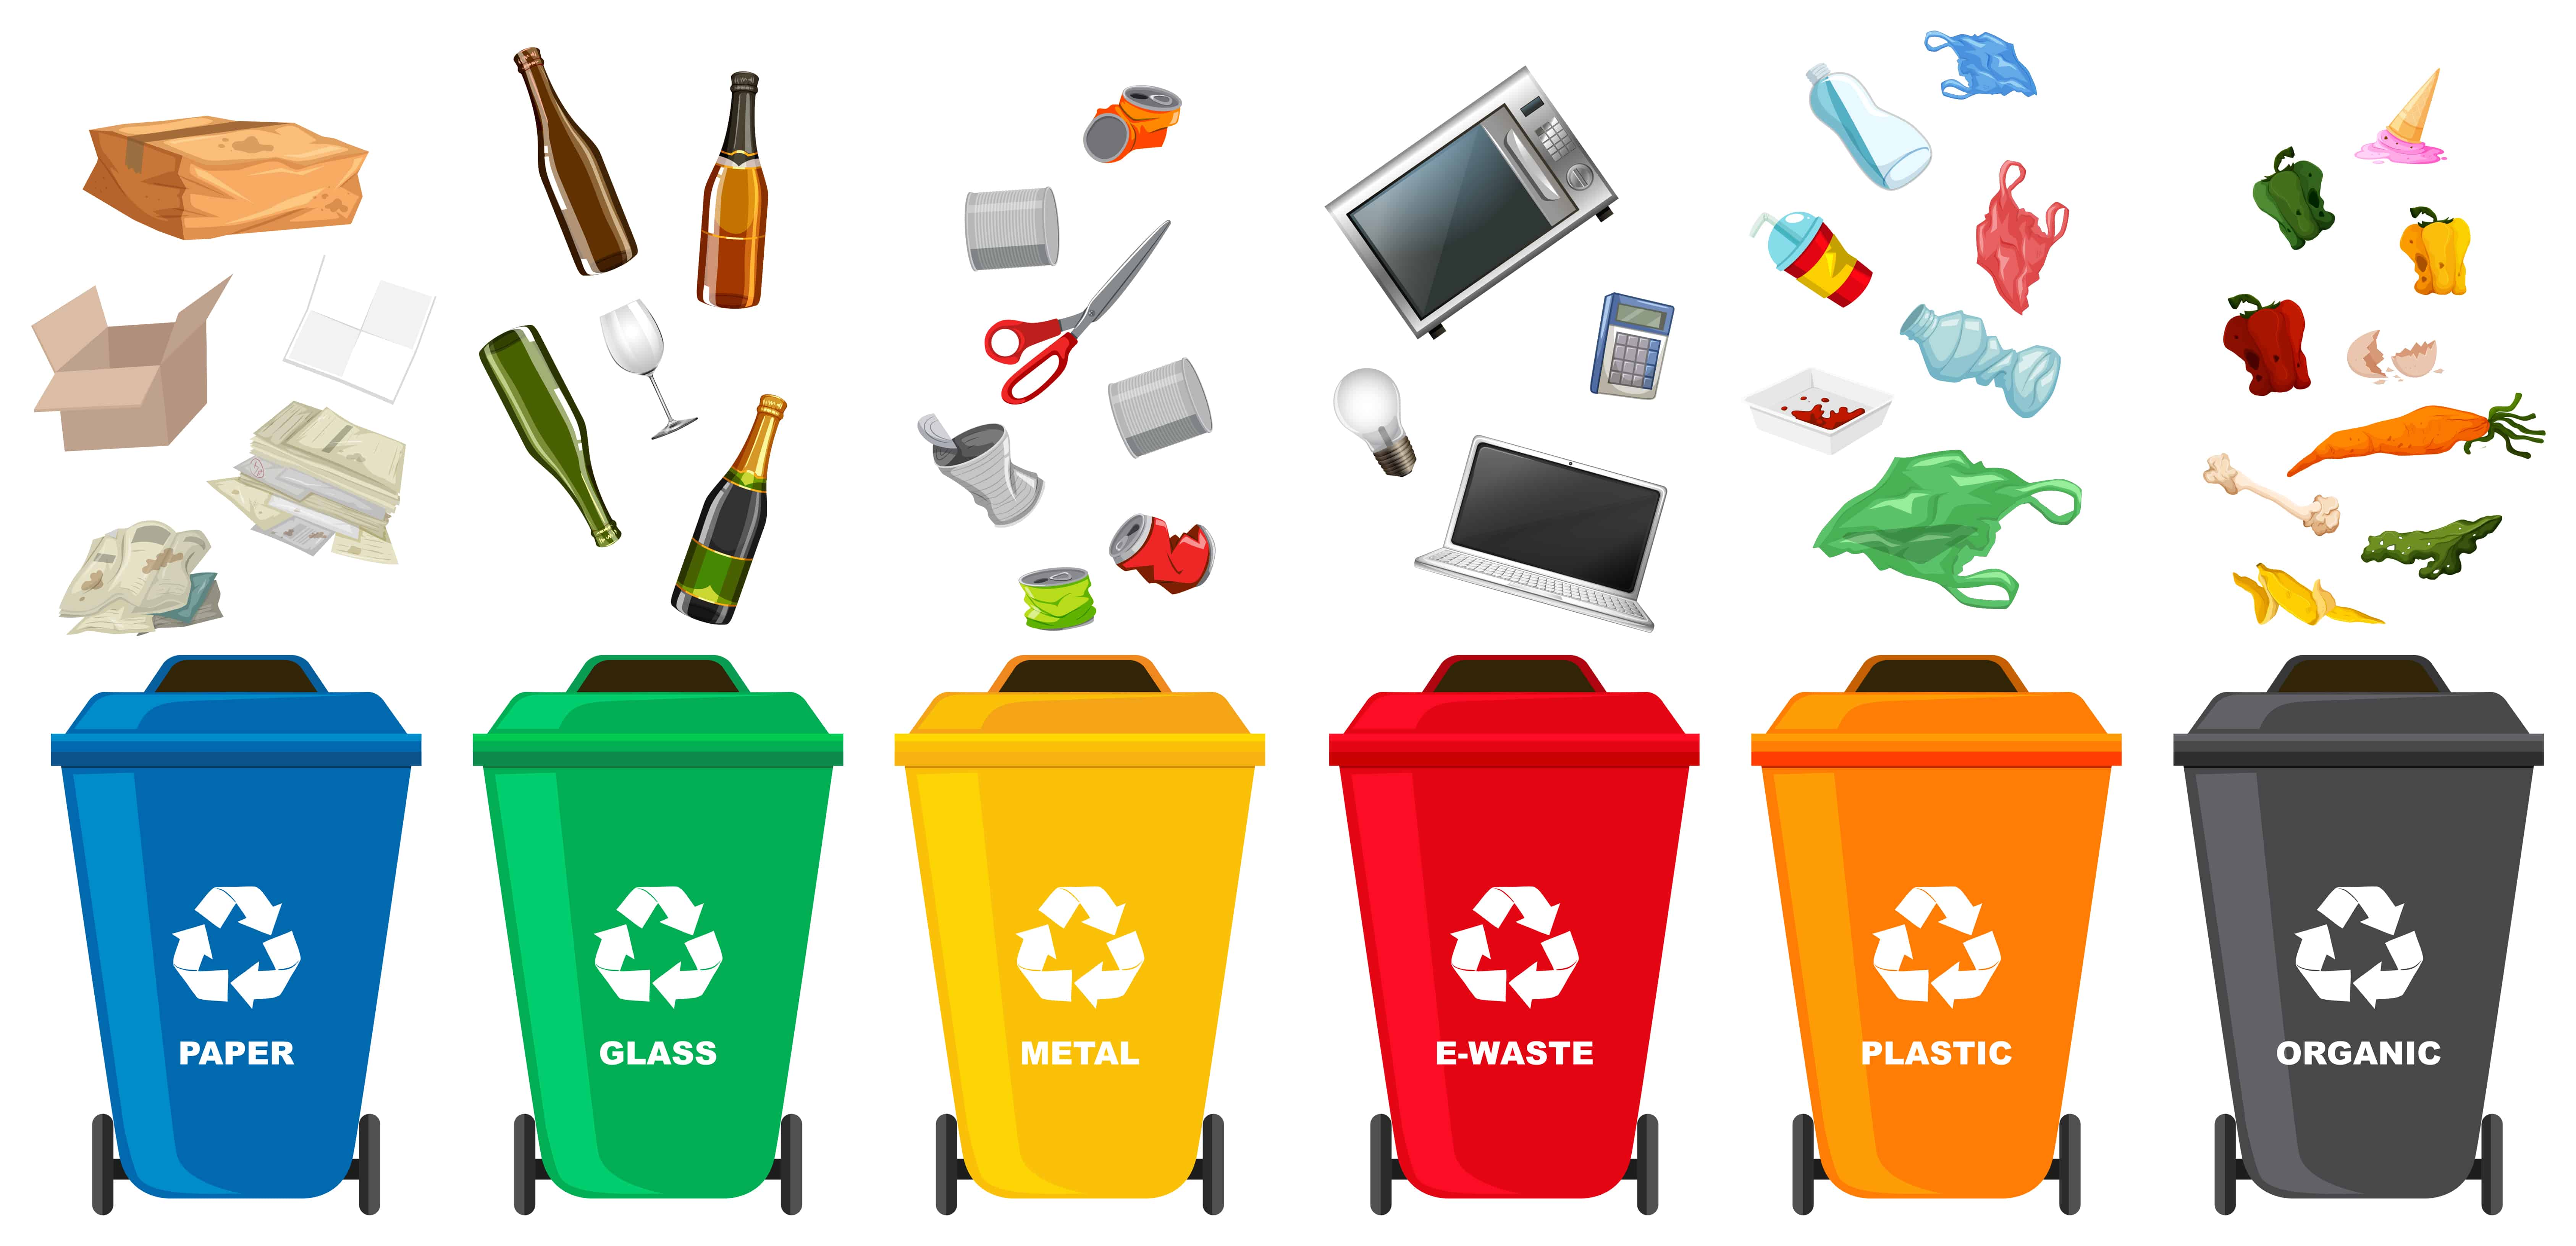 reduce-reuse-recycle-food-waste